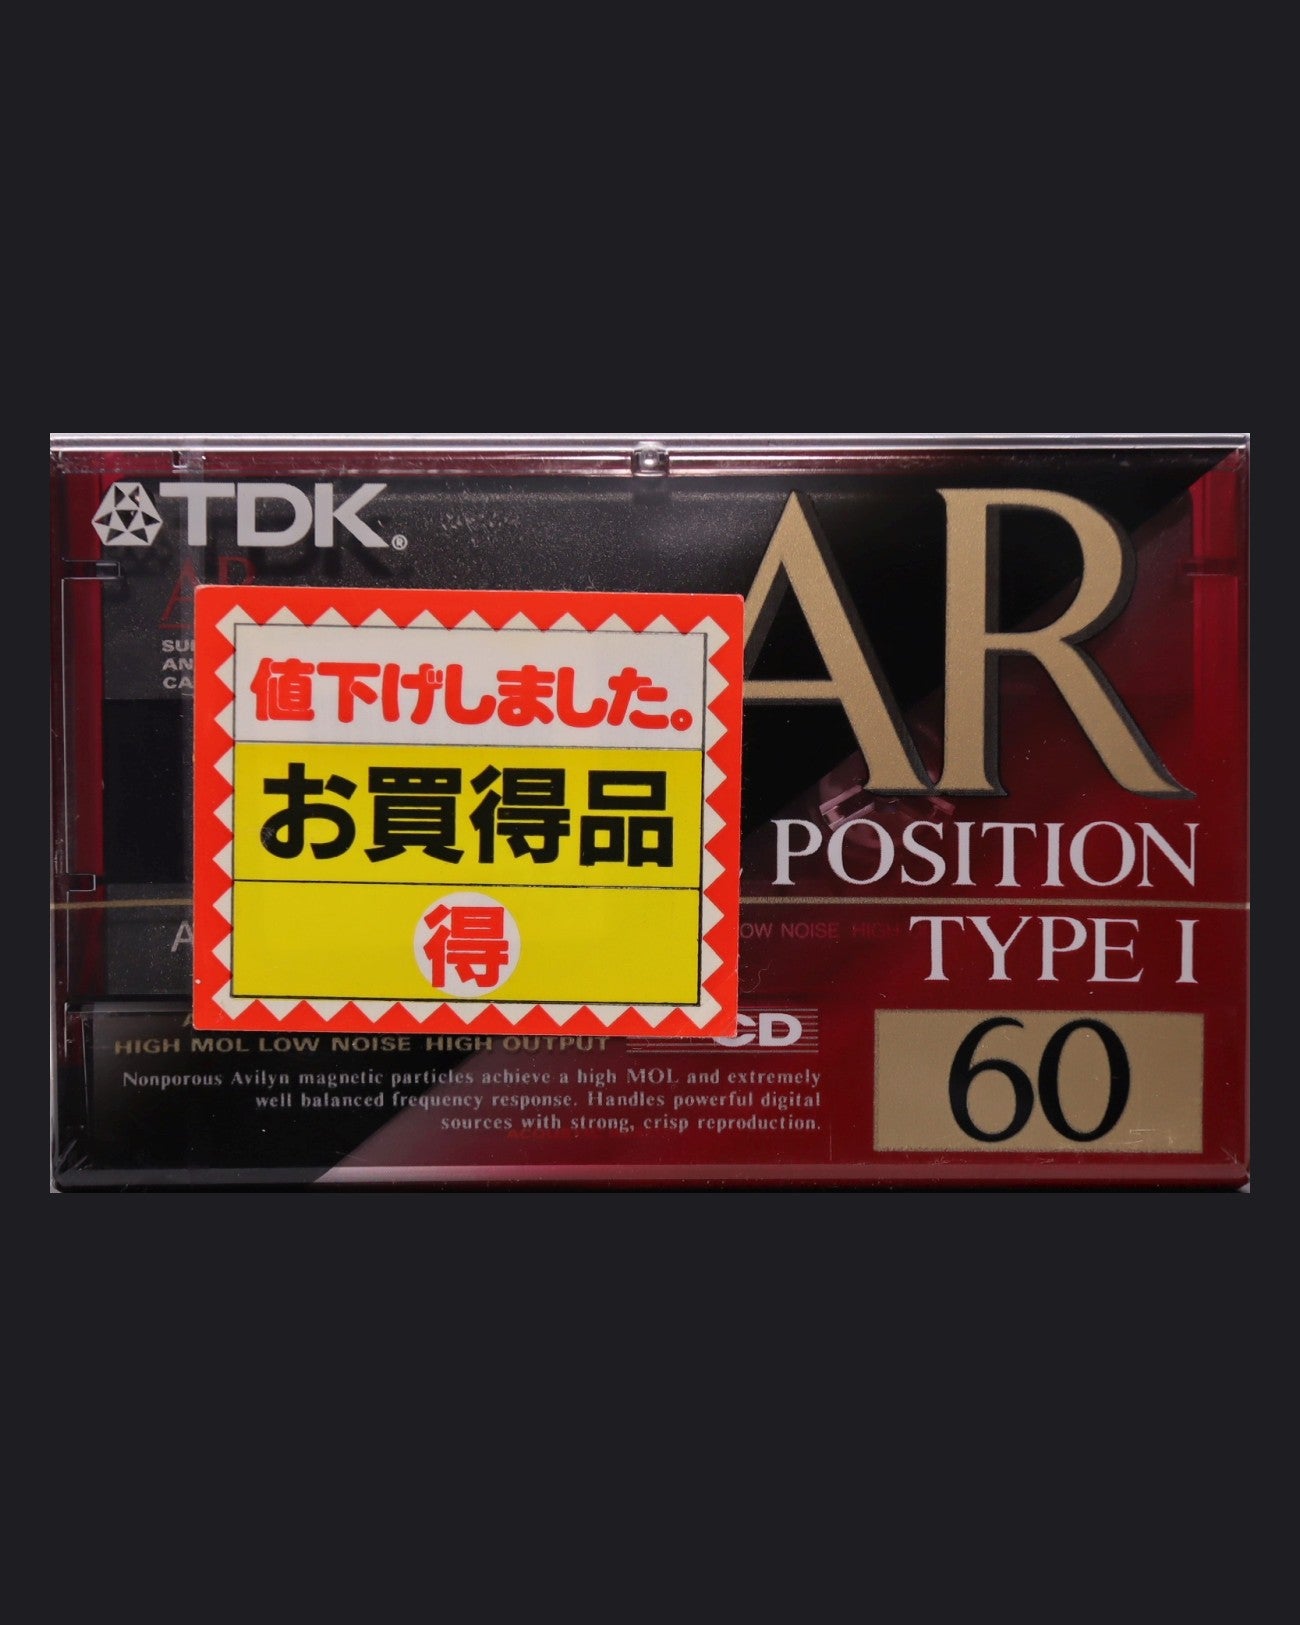 TDK AR (1992-1993 JP) Ultra Ferric